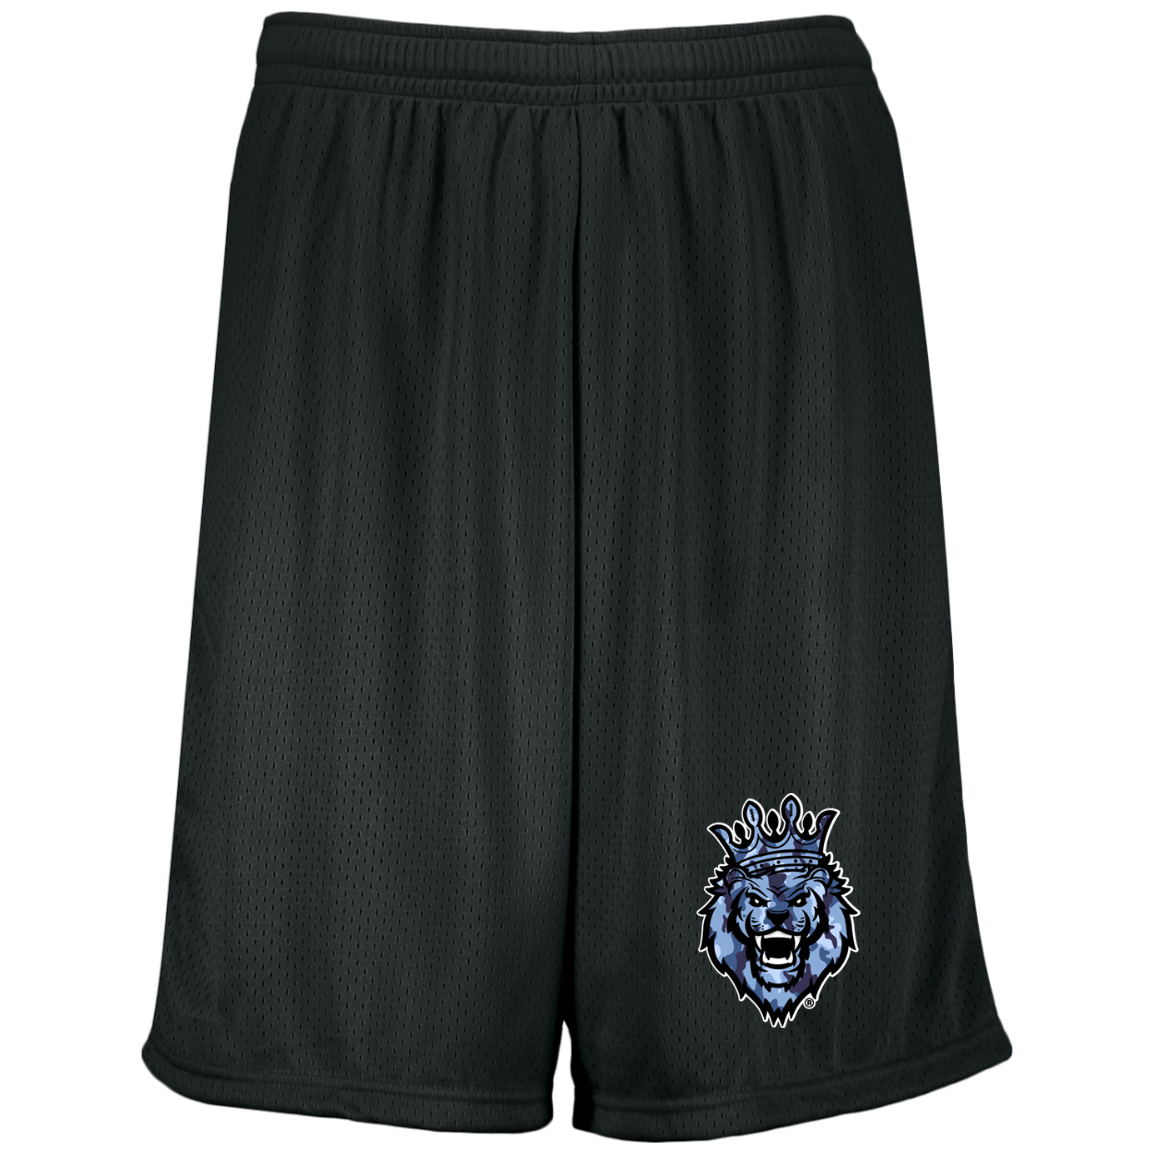 Respect The Roar (Blue) - 1844 Moisture-Wicking 9 inch Inseam Mesh Shorts